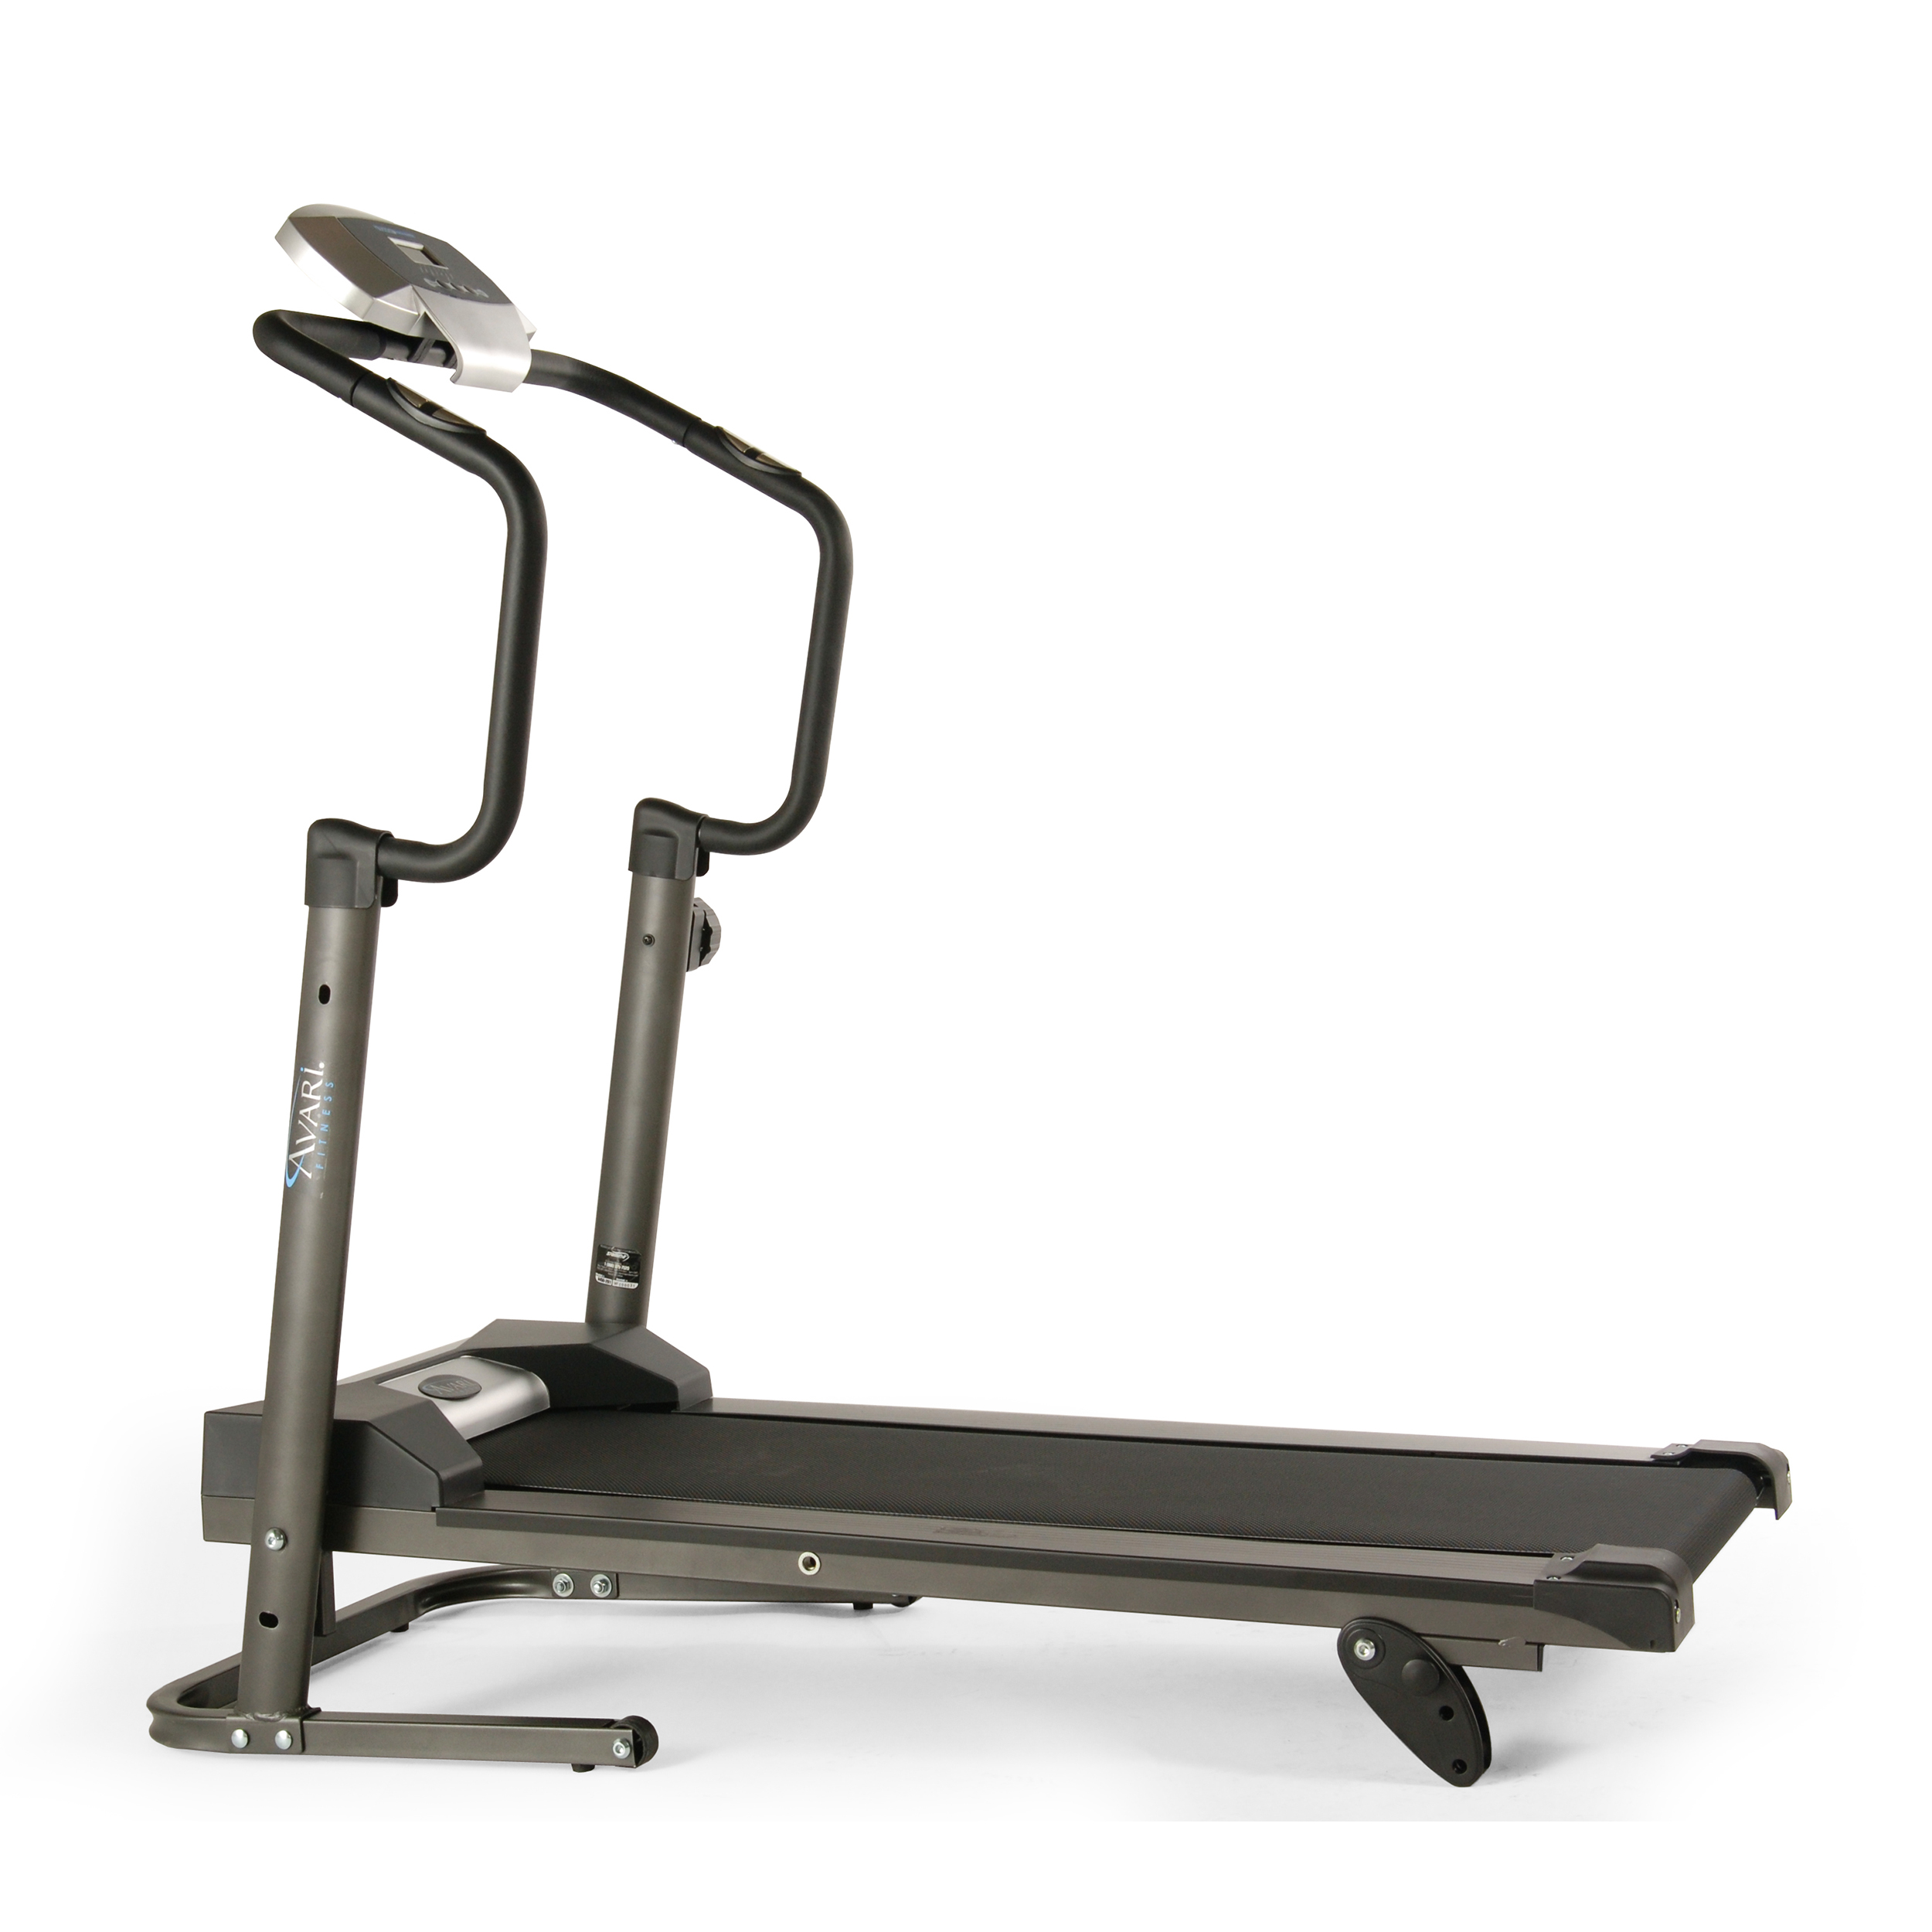 Avari Adjustable Height Treadmill home gym exercise equipment